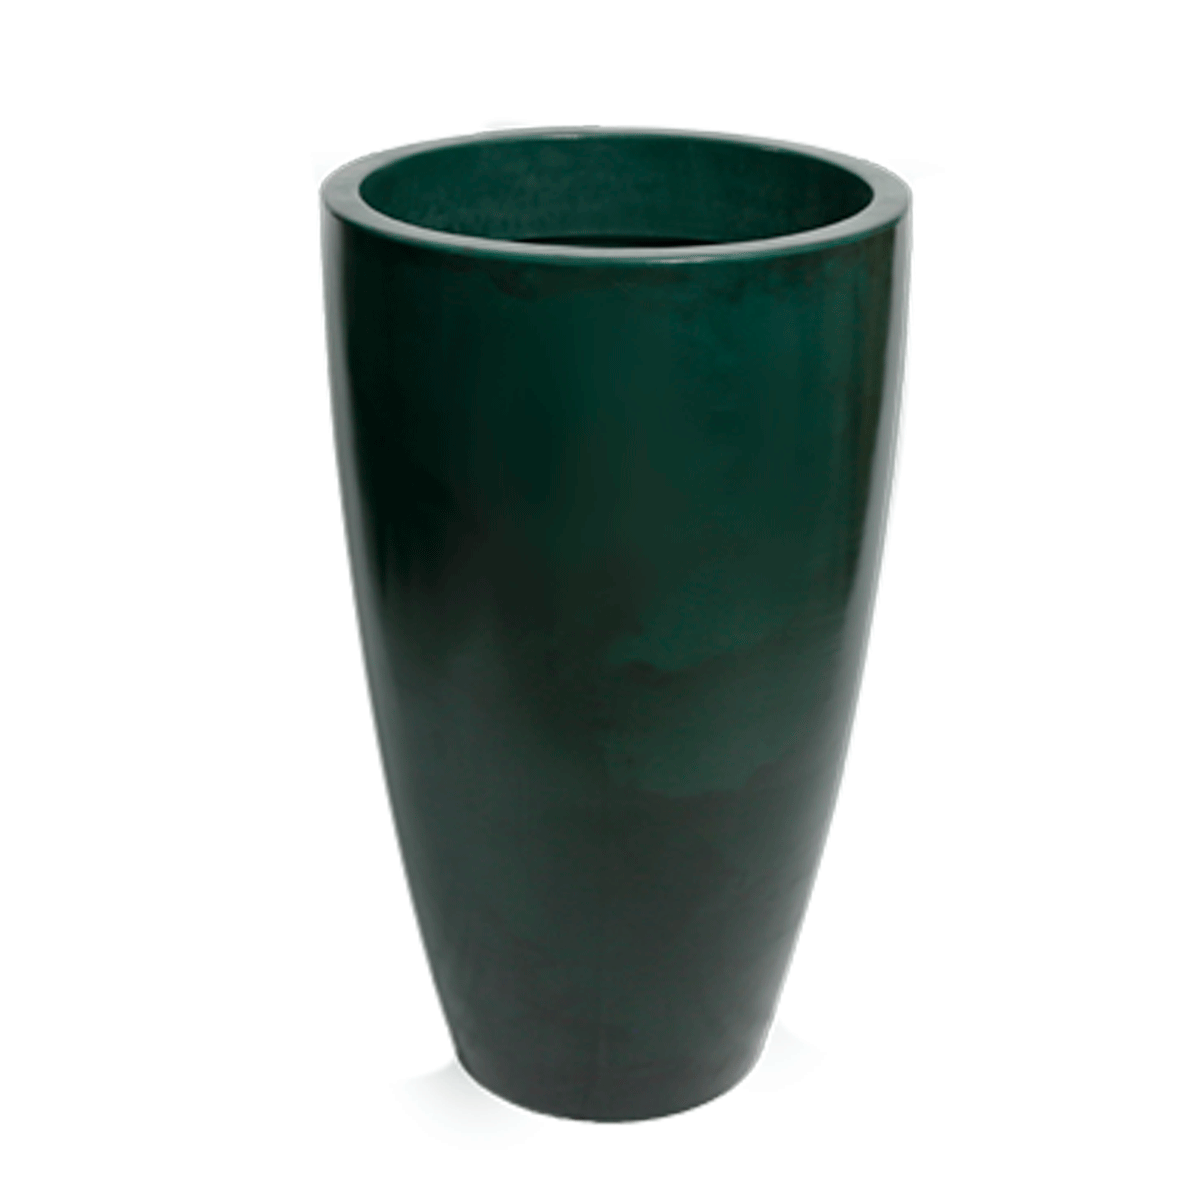 Vaso de Polietileno Redondo ALTO VERONA tam 40 x 70 cm Vasart cor Antique Verde - 1